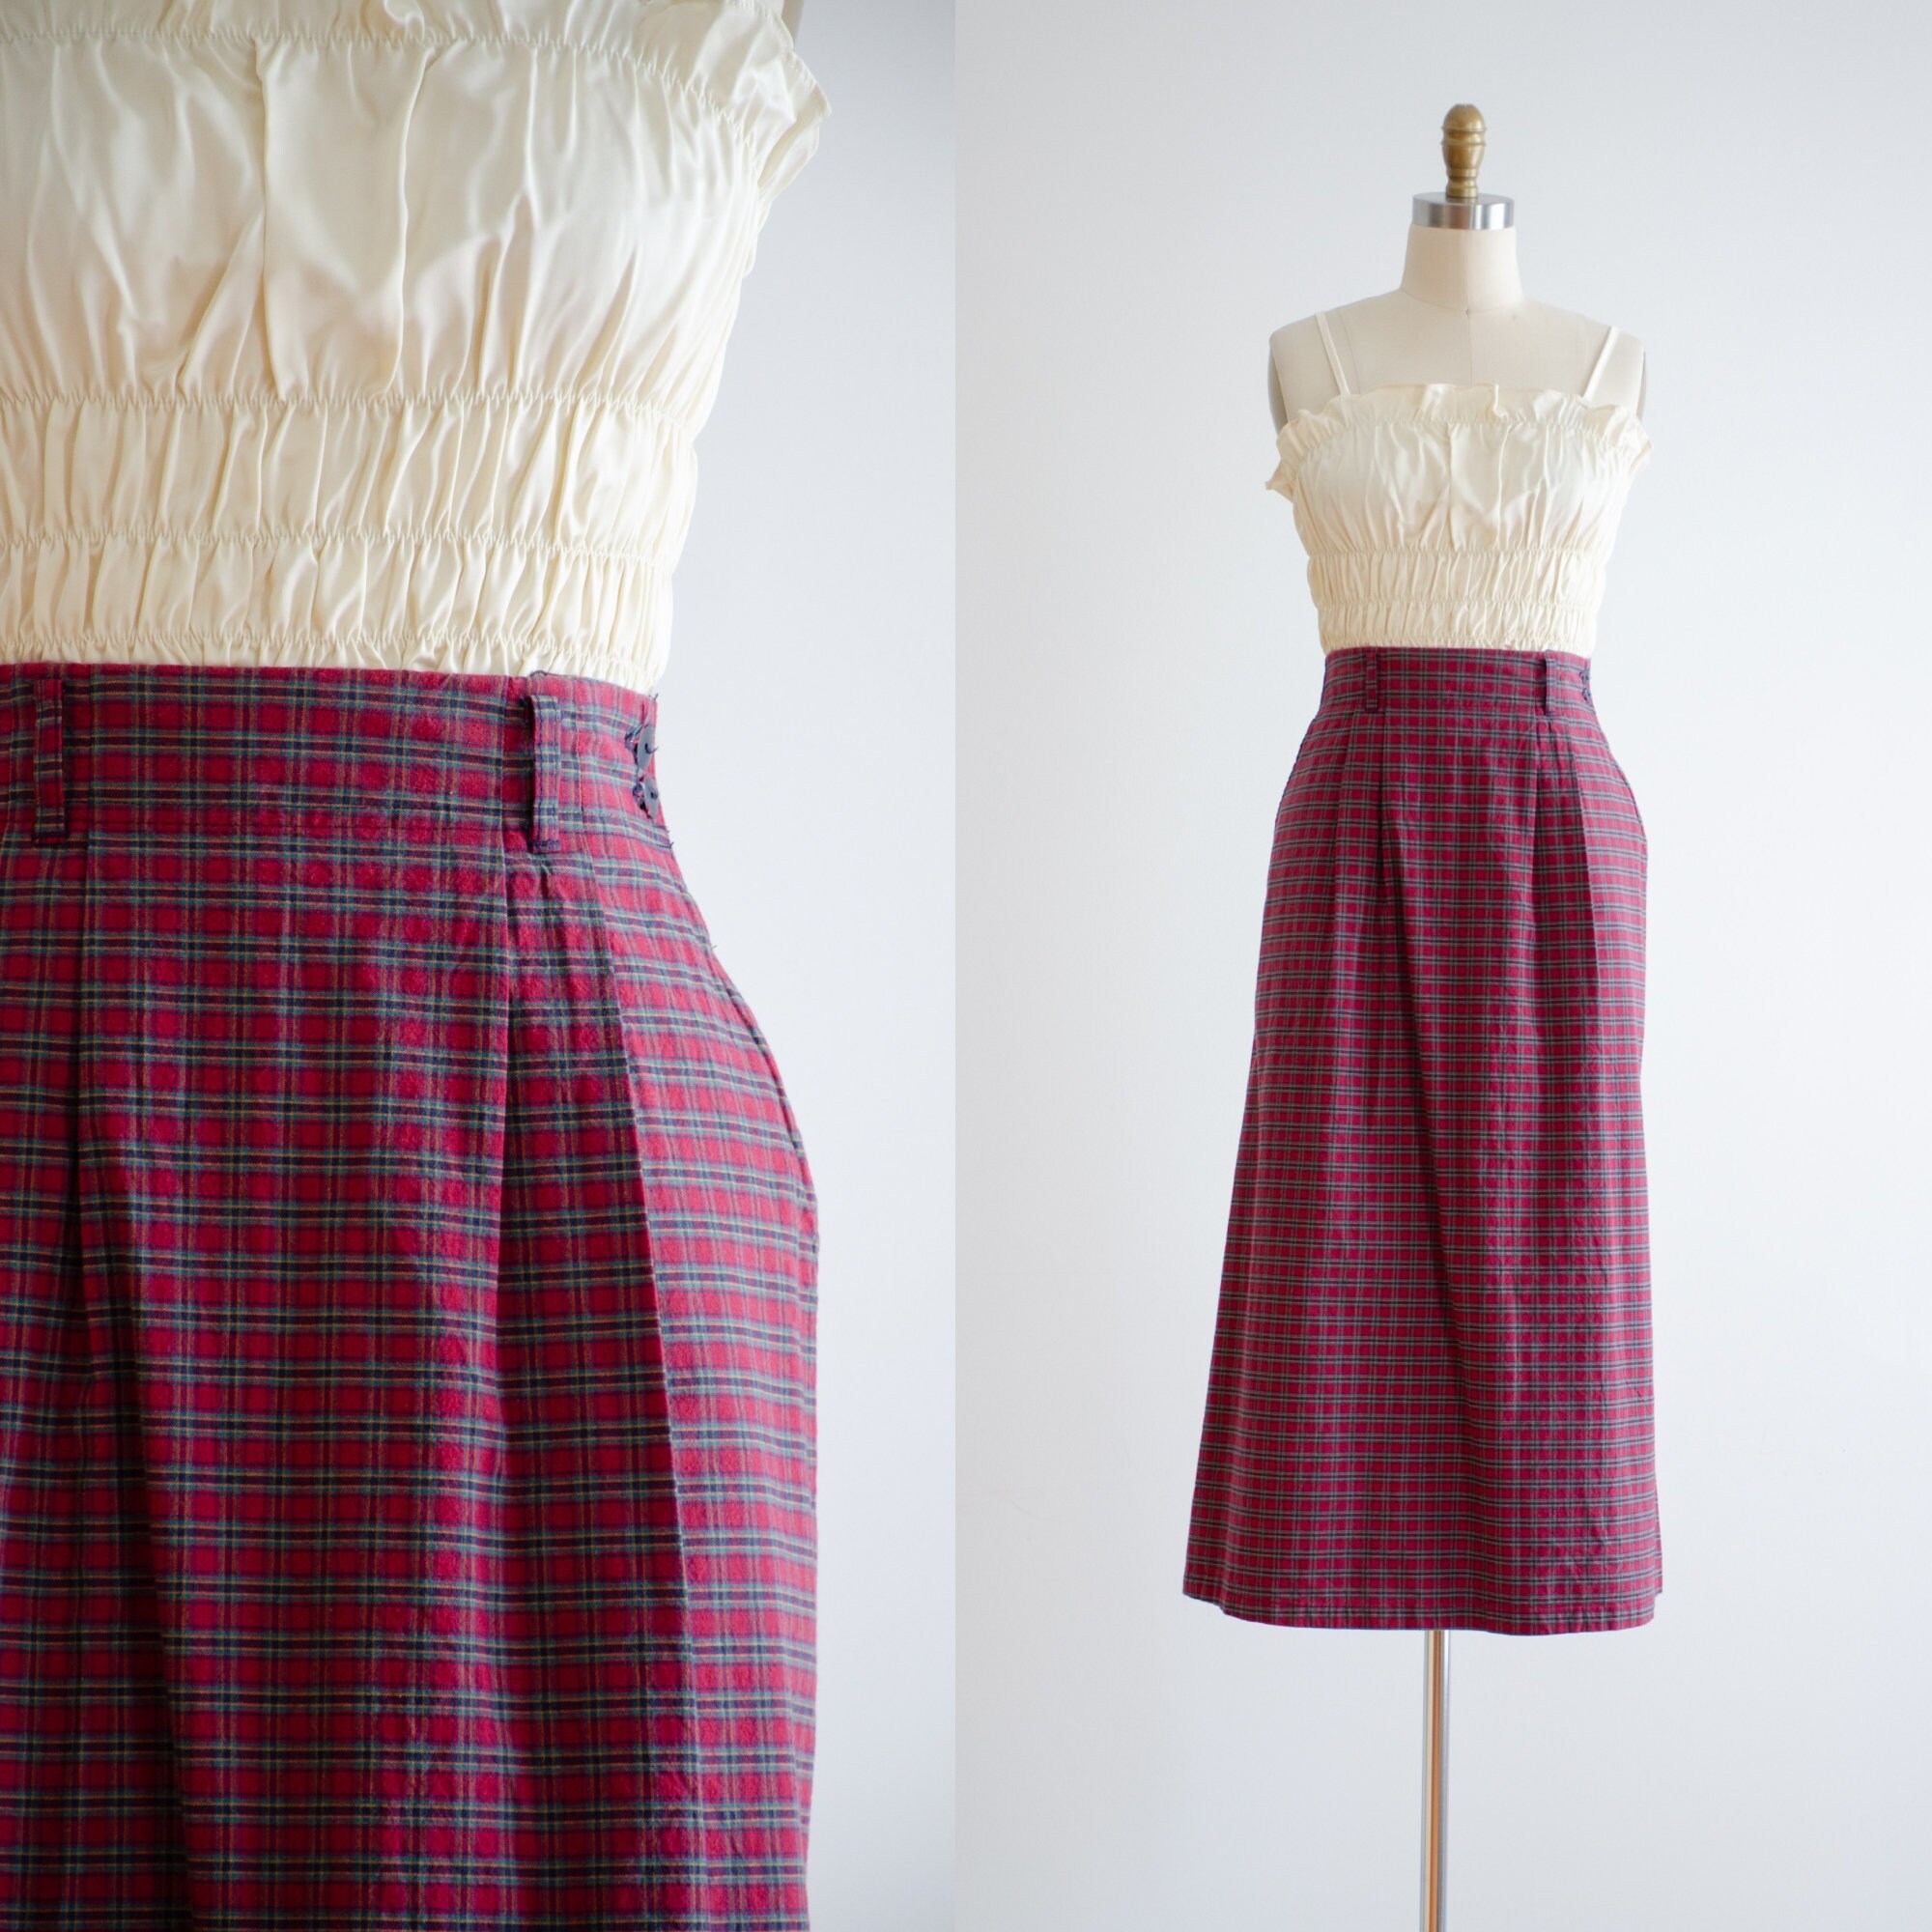 Vintage tartan skirt with white jumper and burgundy tights - Rebel